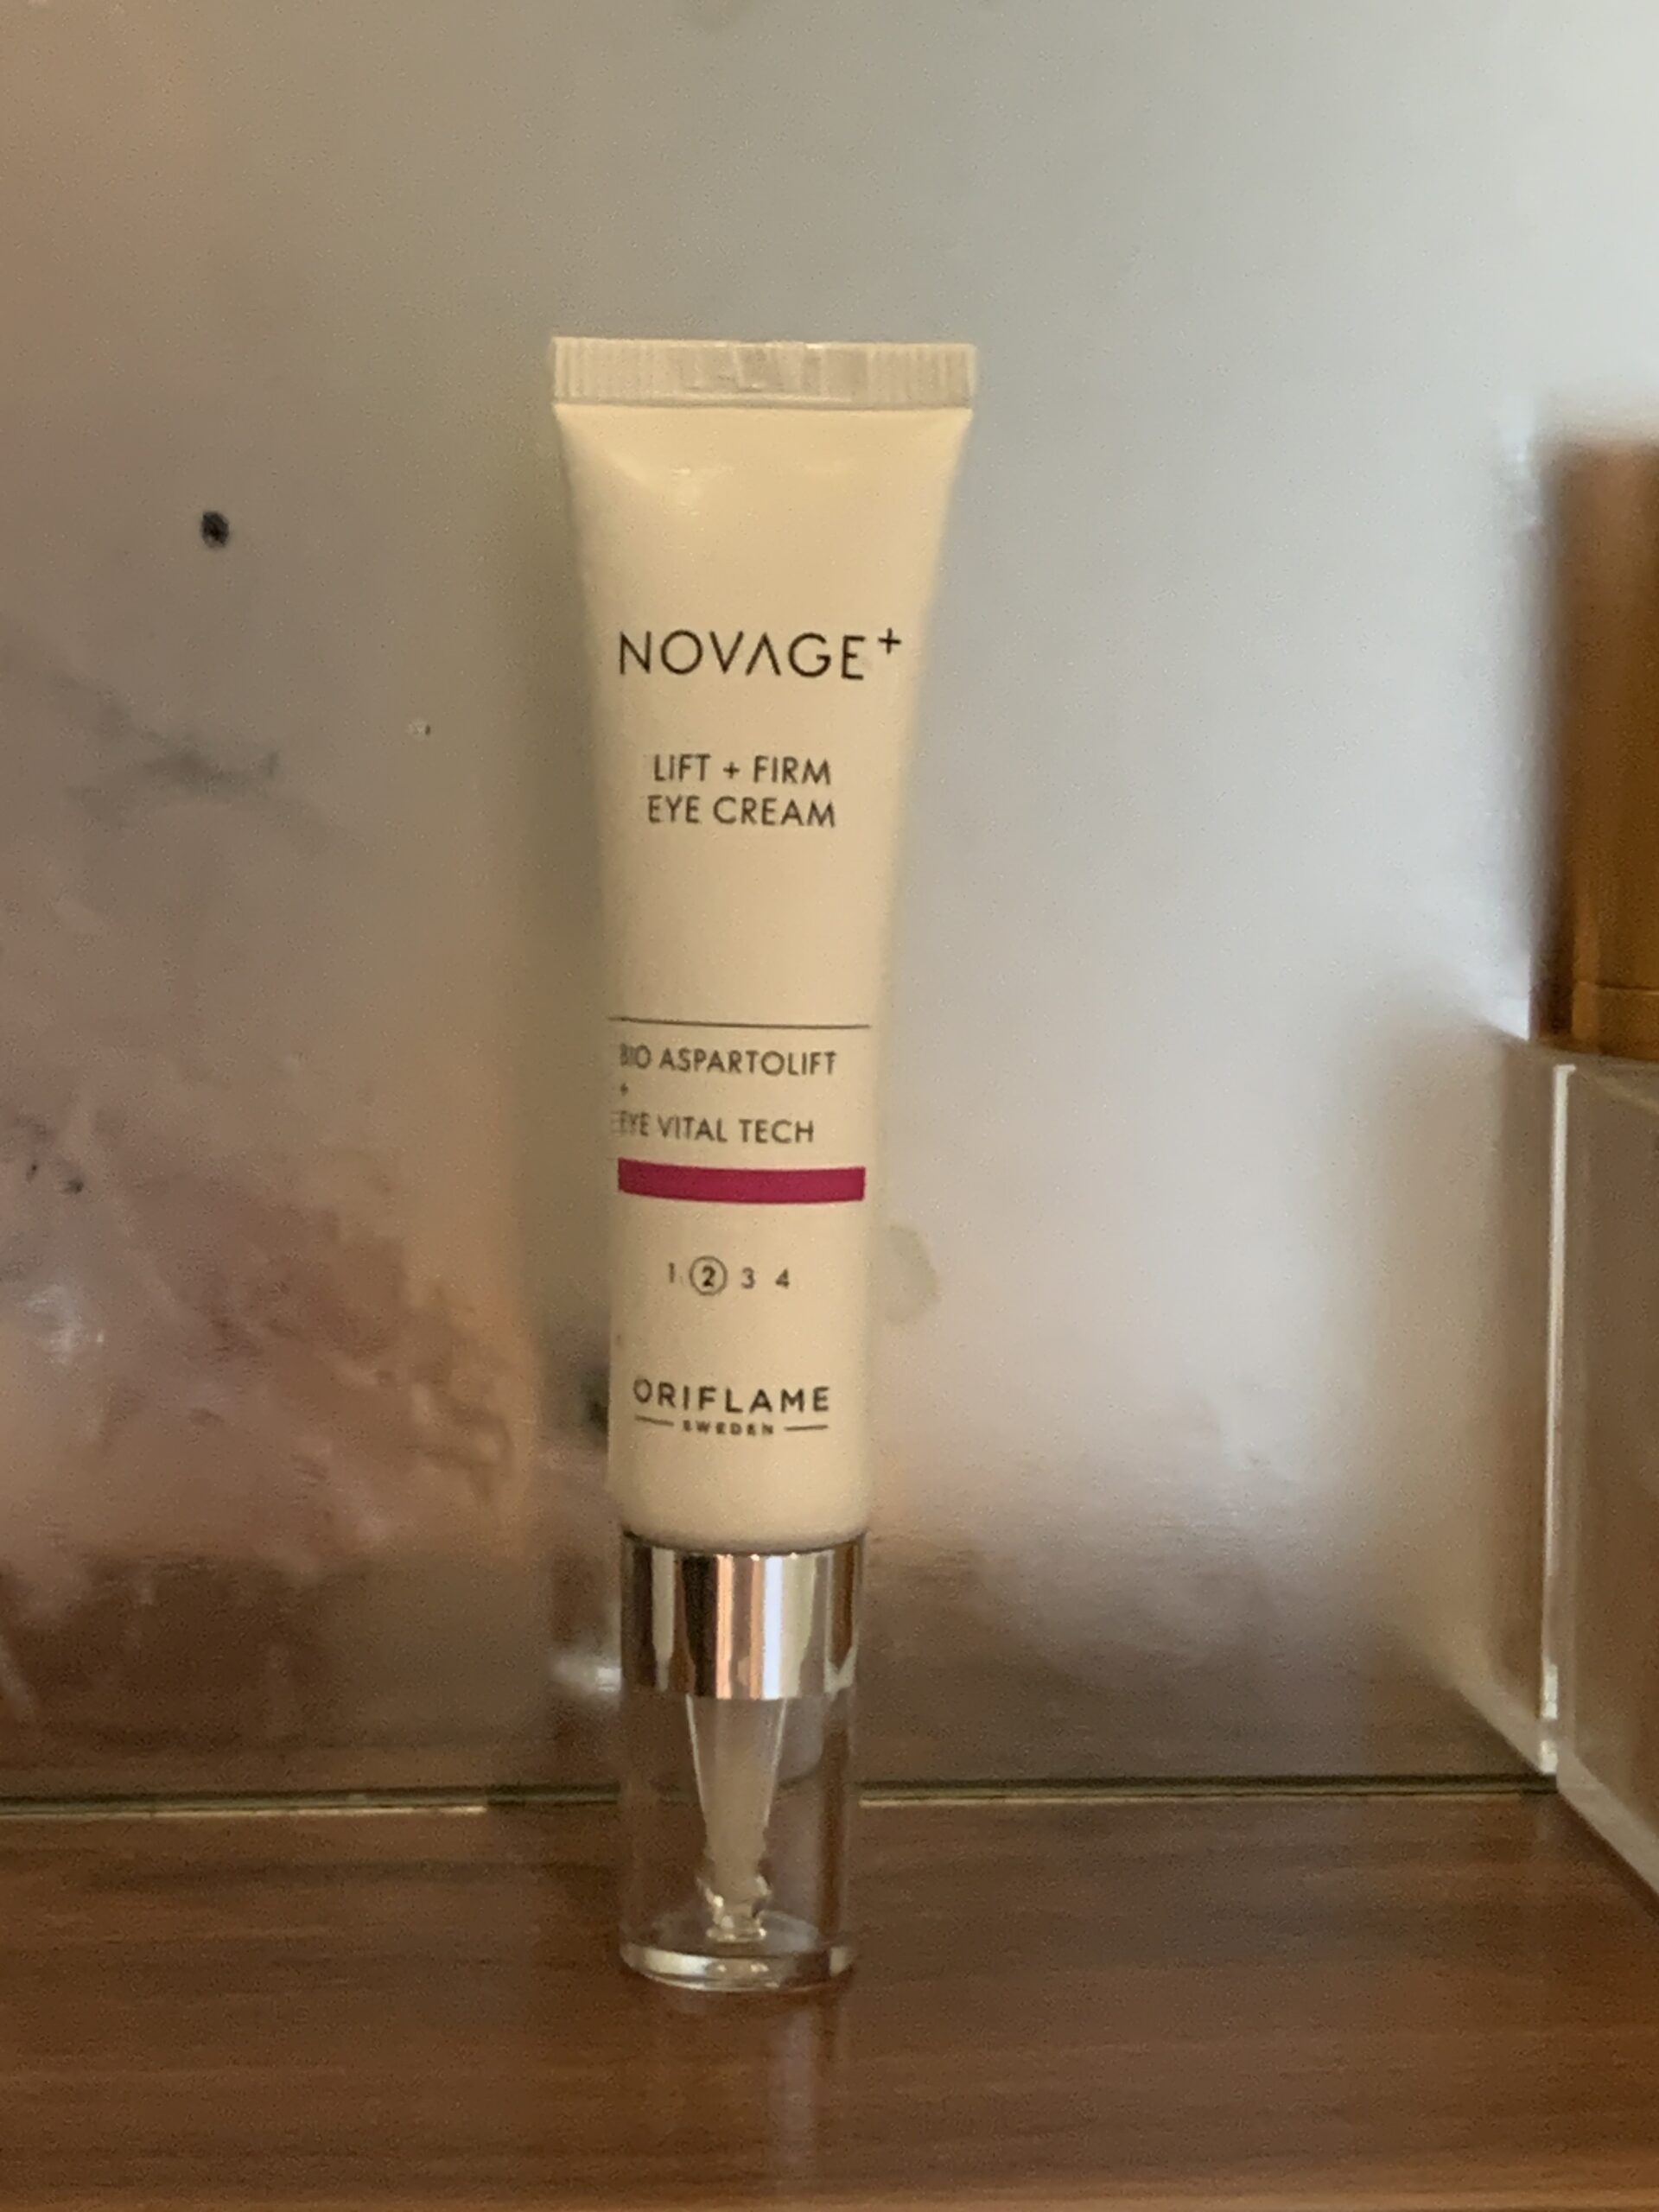 Novage+ Lift firm eye cream